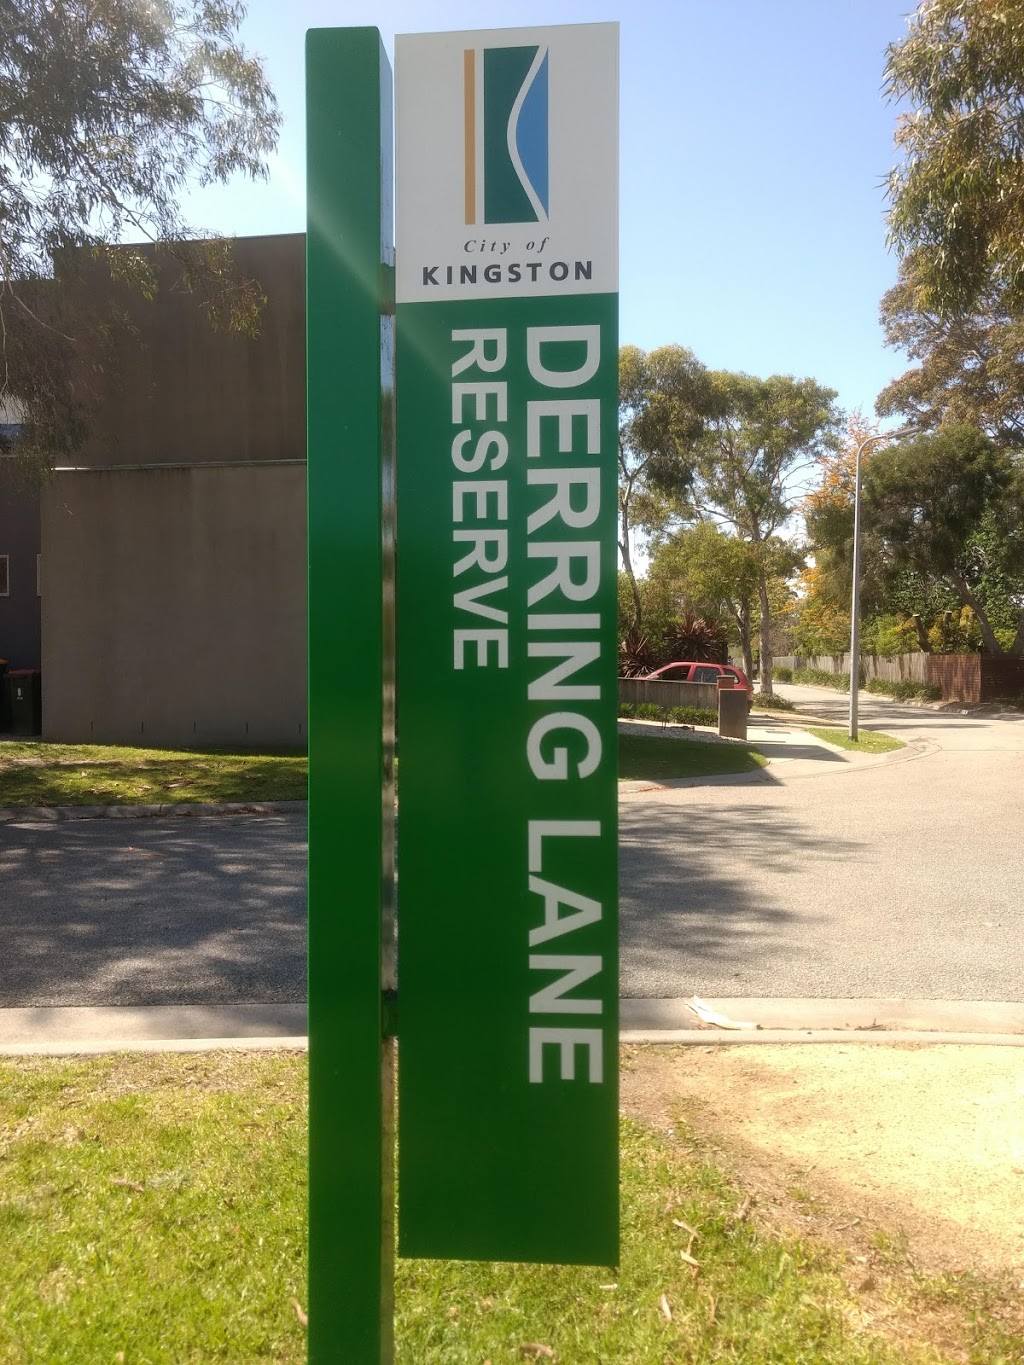 Derring Road Dog Park | park | 22 Eagland Rd, Cheltenham VIC 3192, Australia